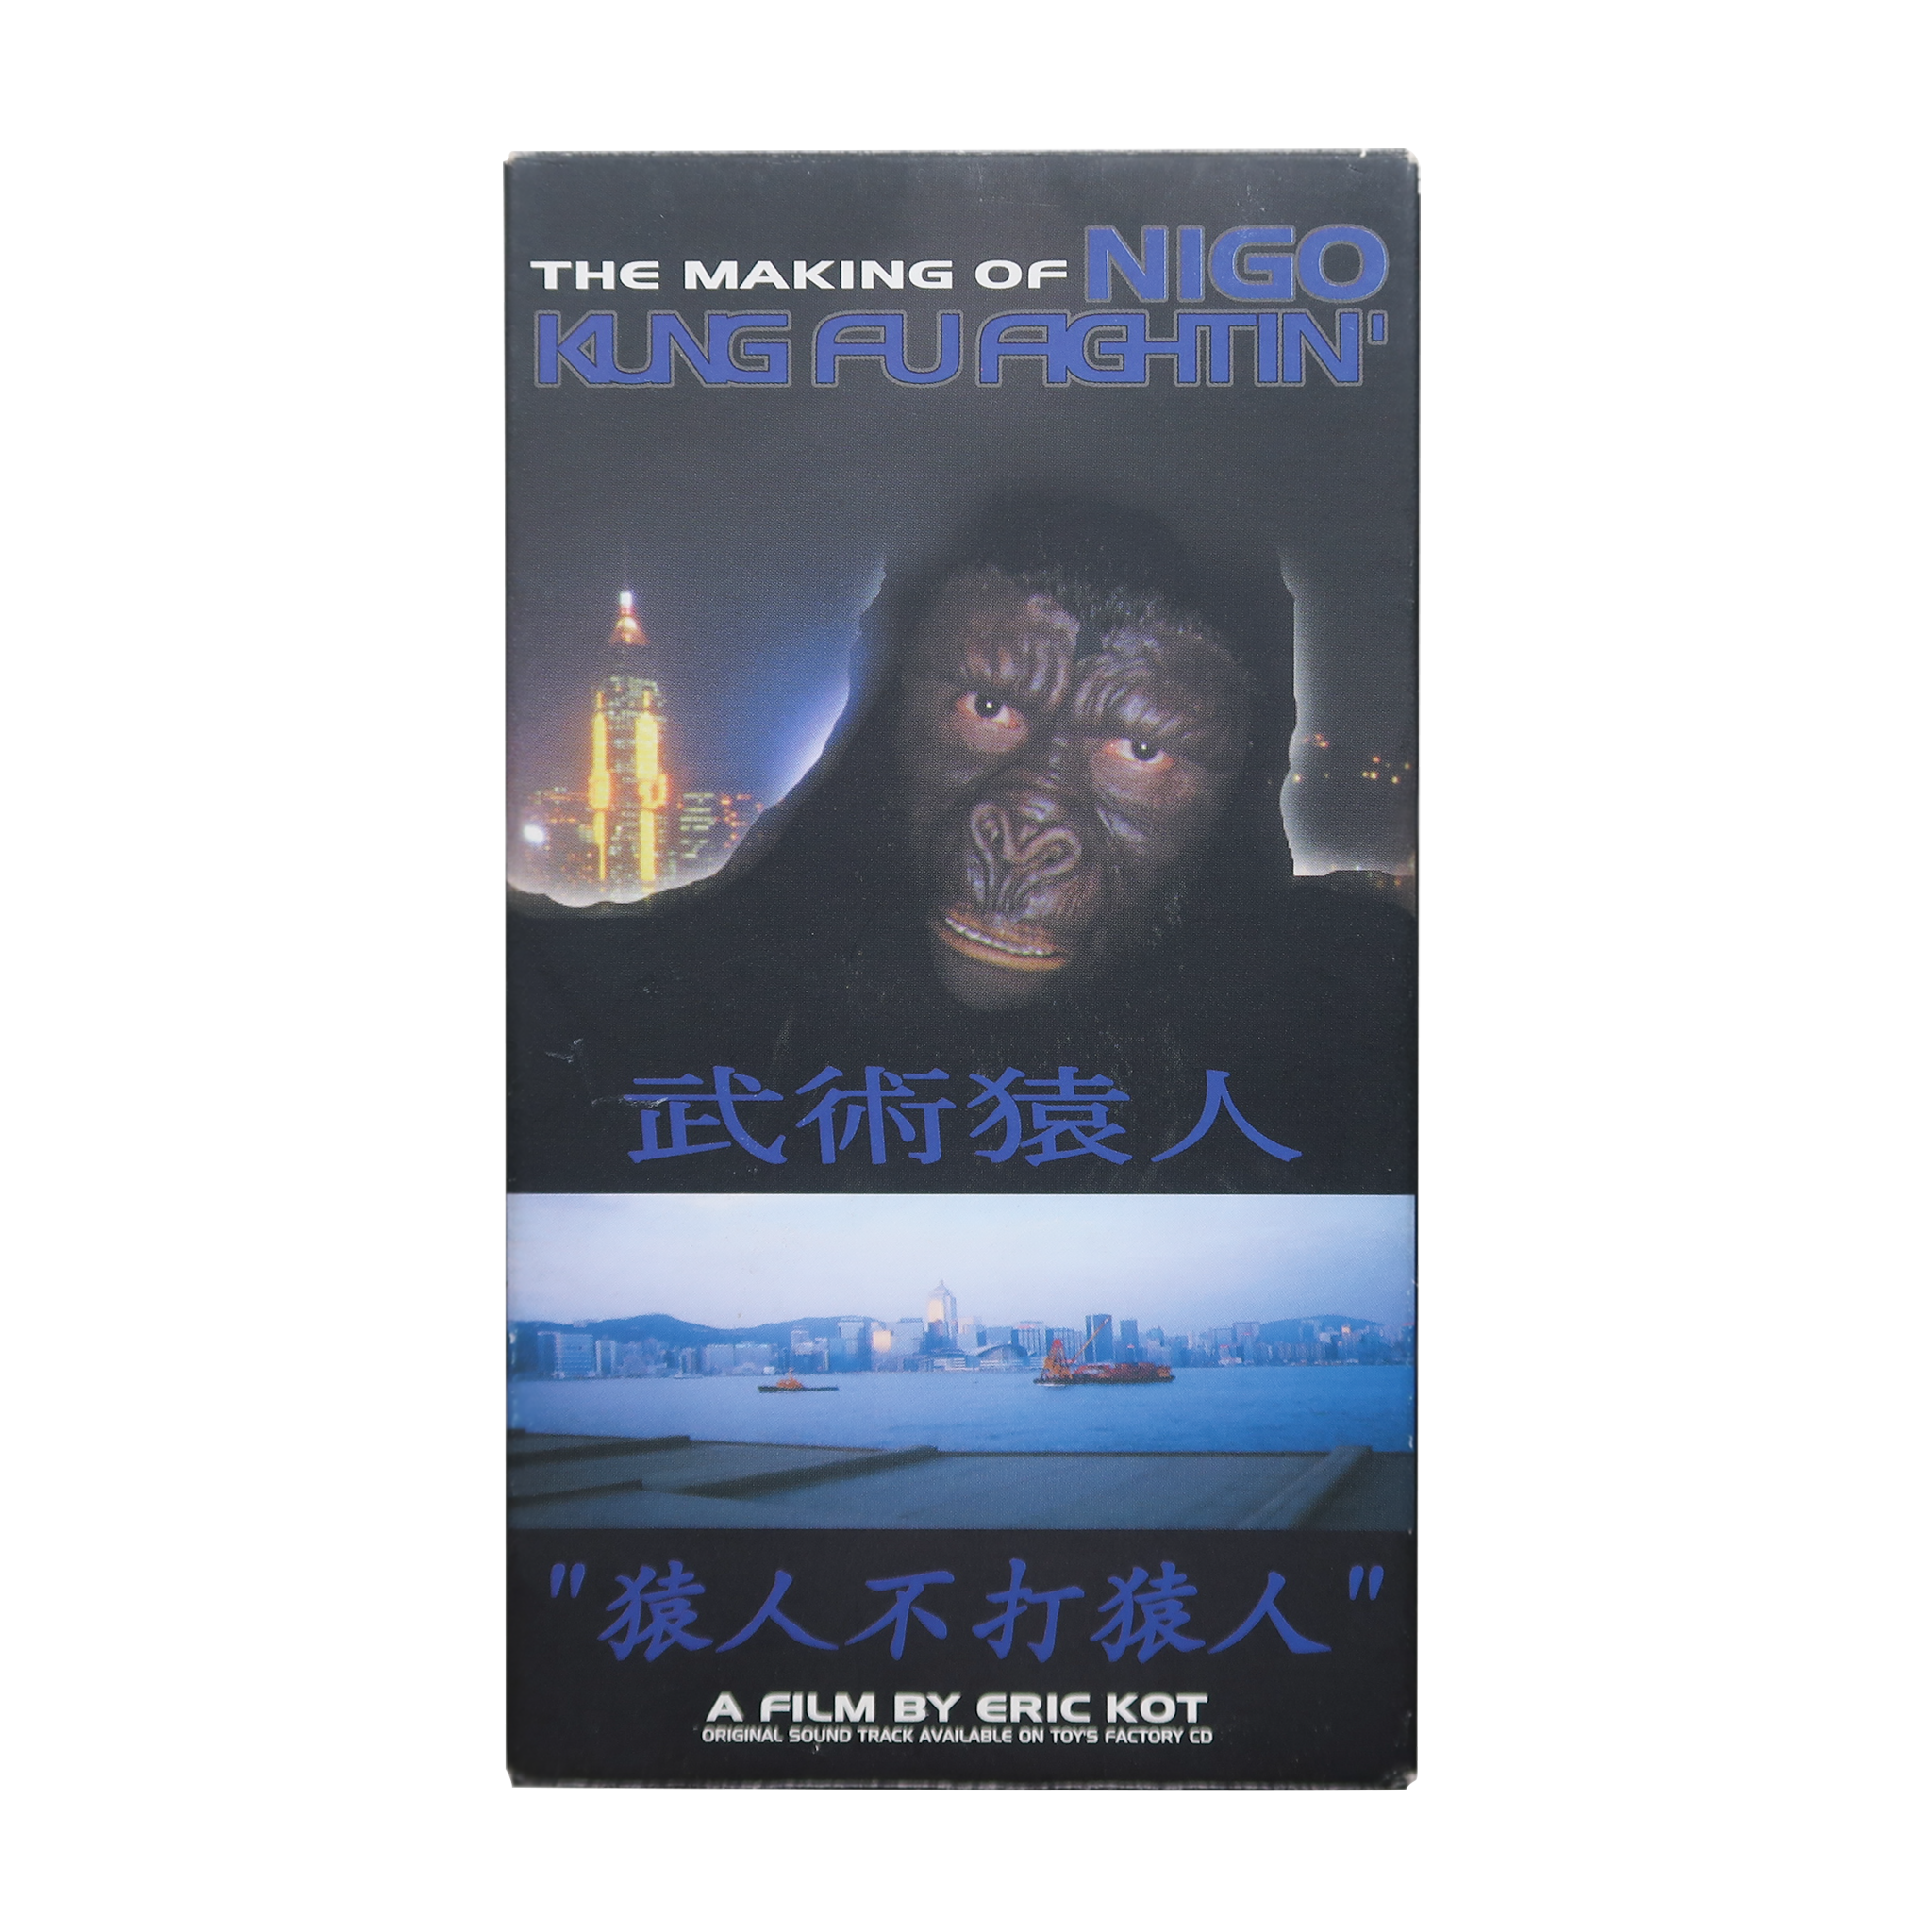 The Making Of NIGO Kung Fu Fightin' VHS (1999)